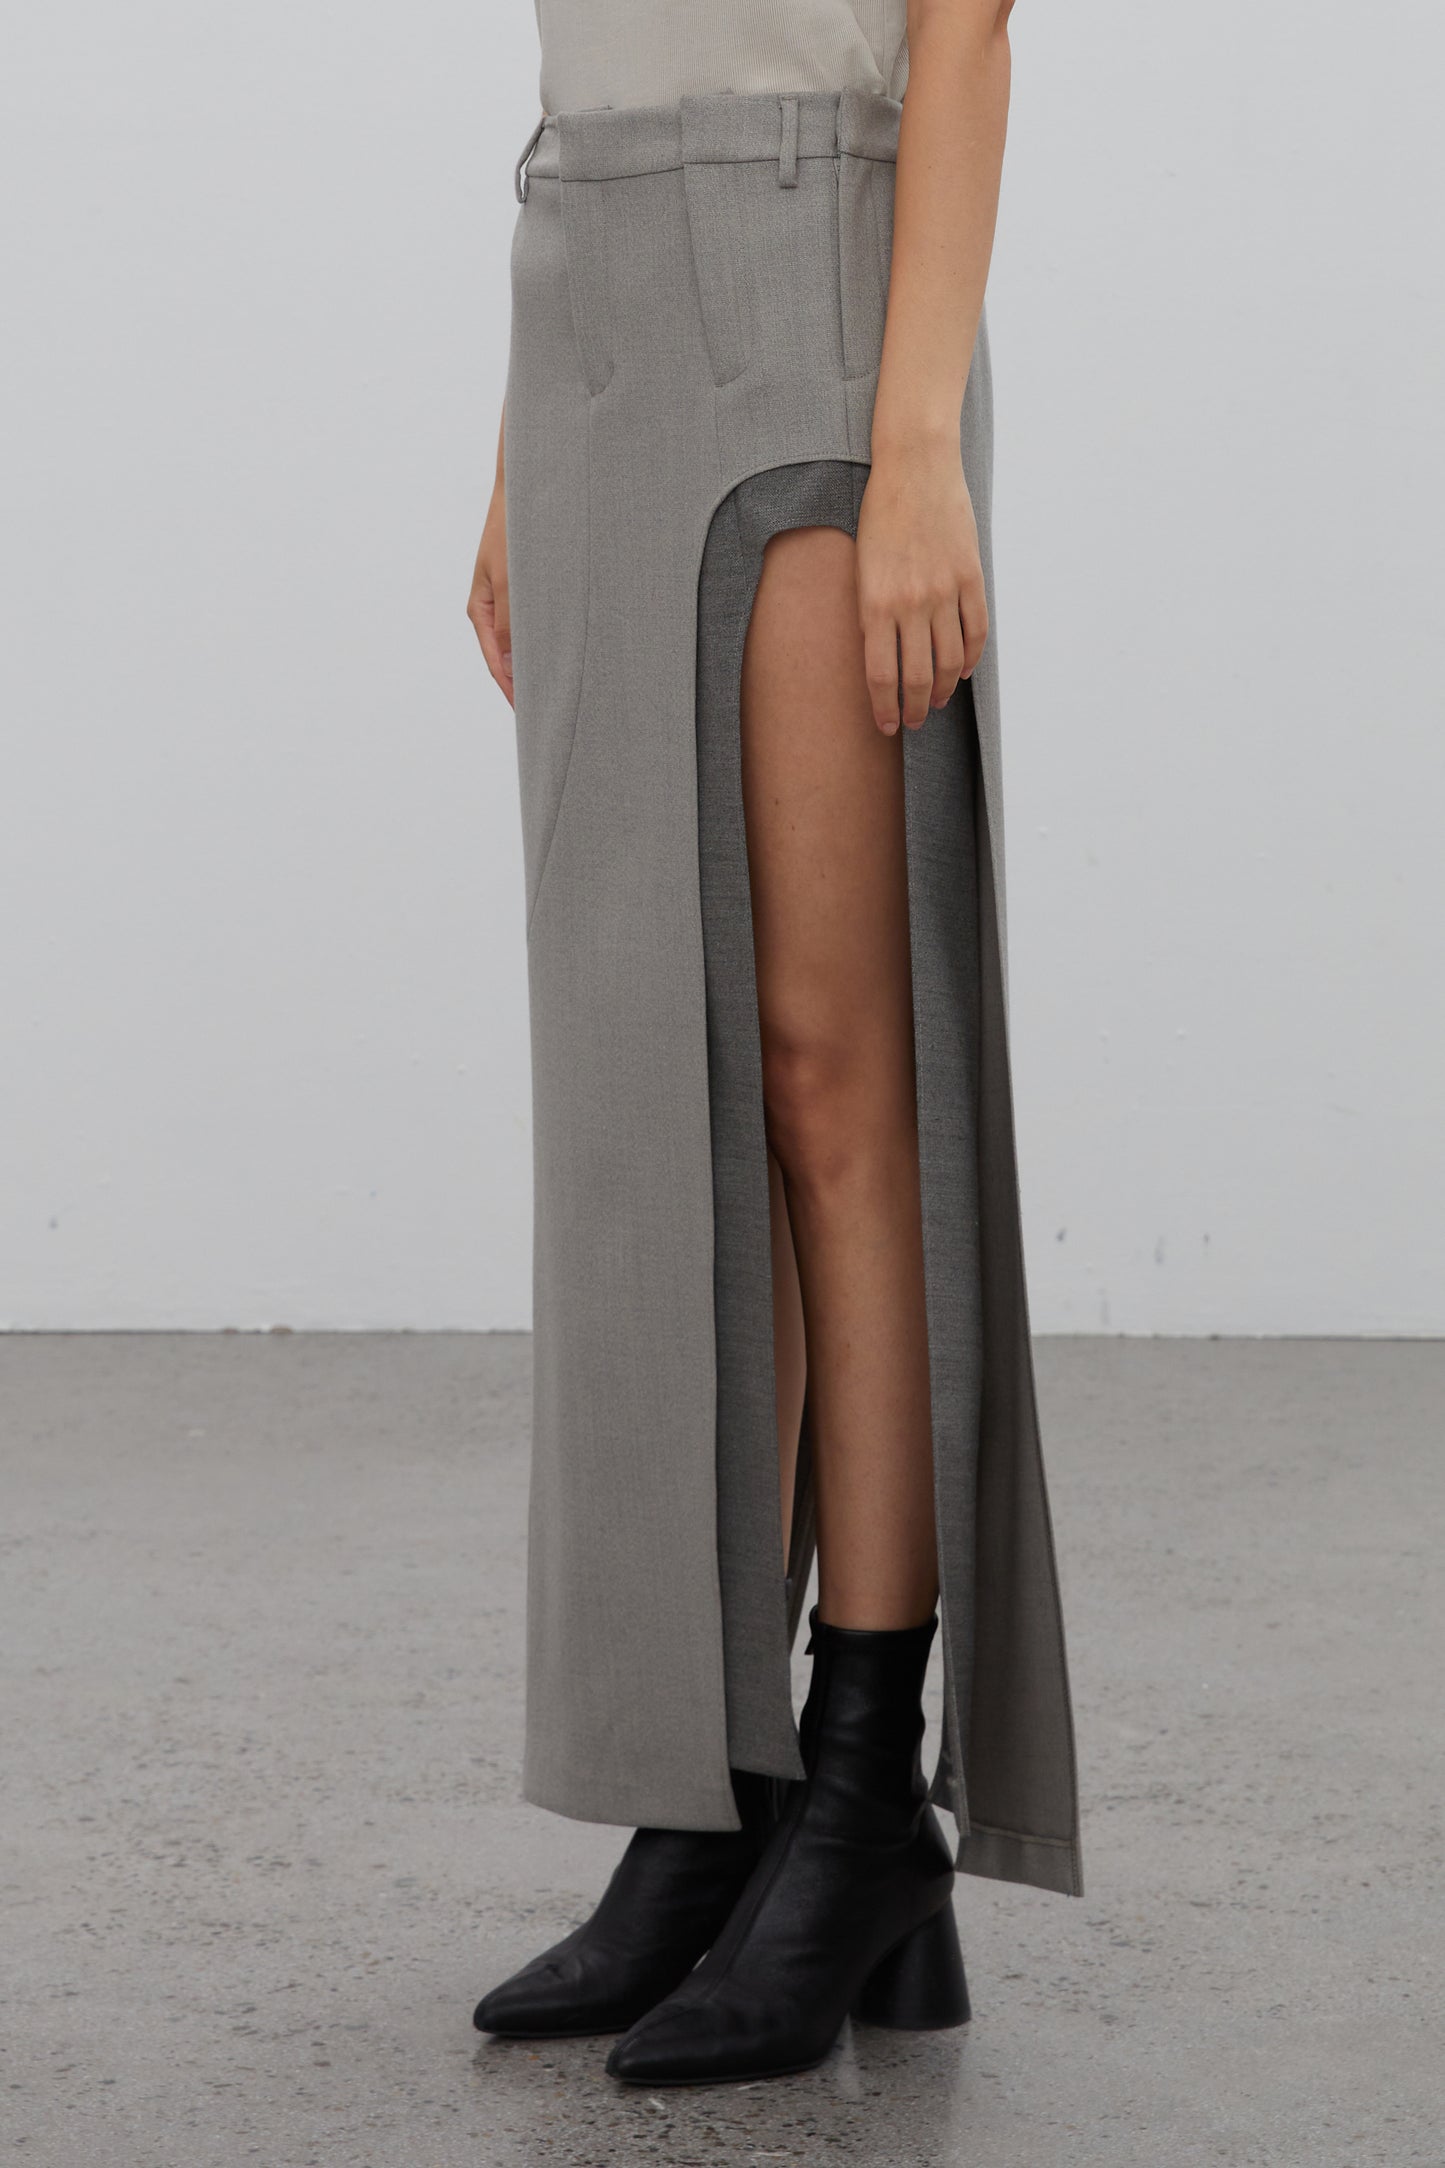 Layered slit skirt